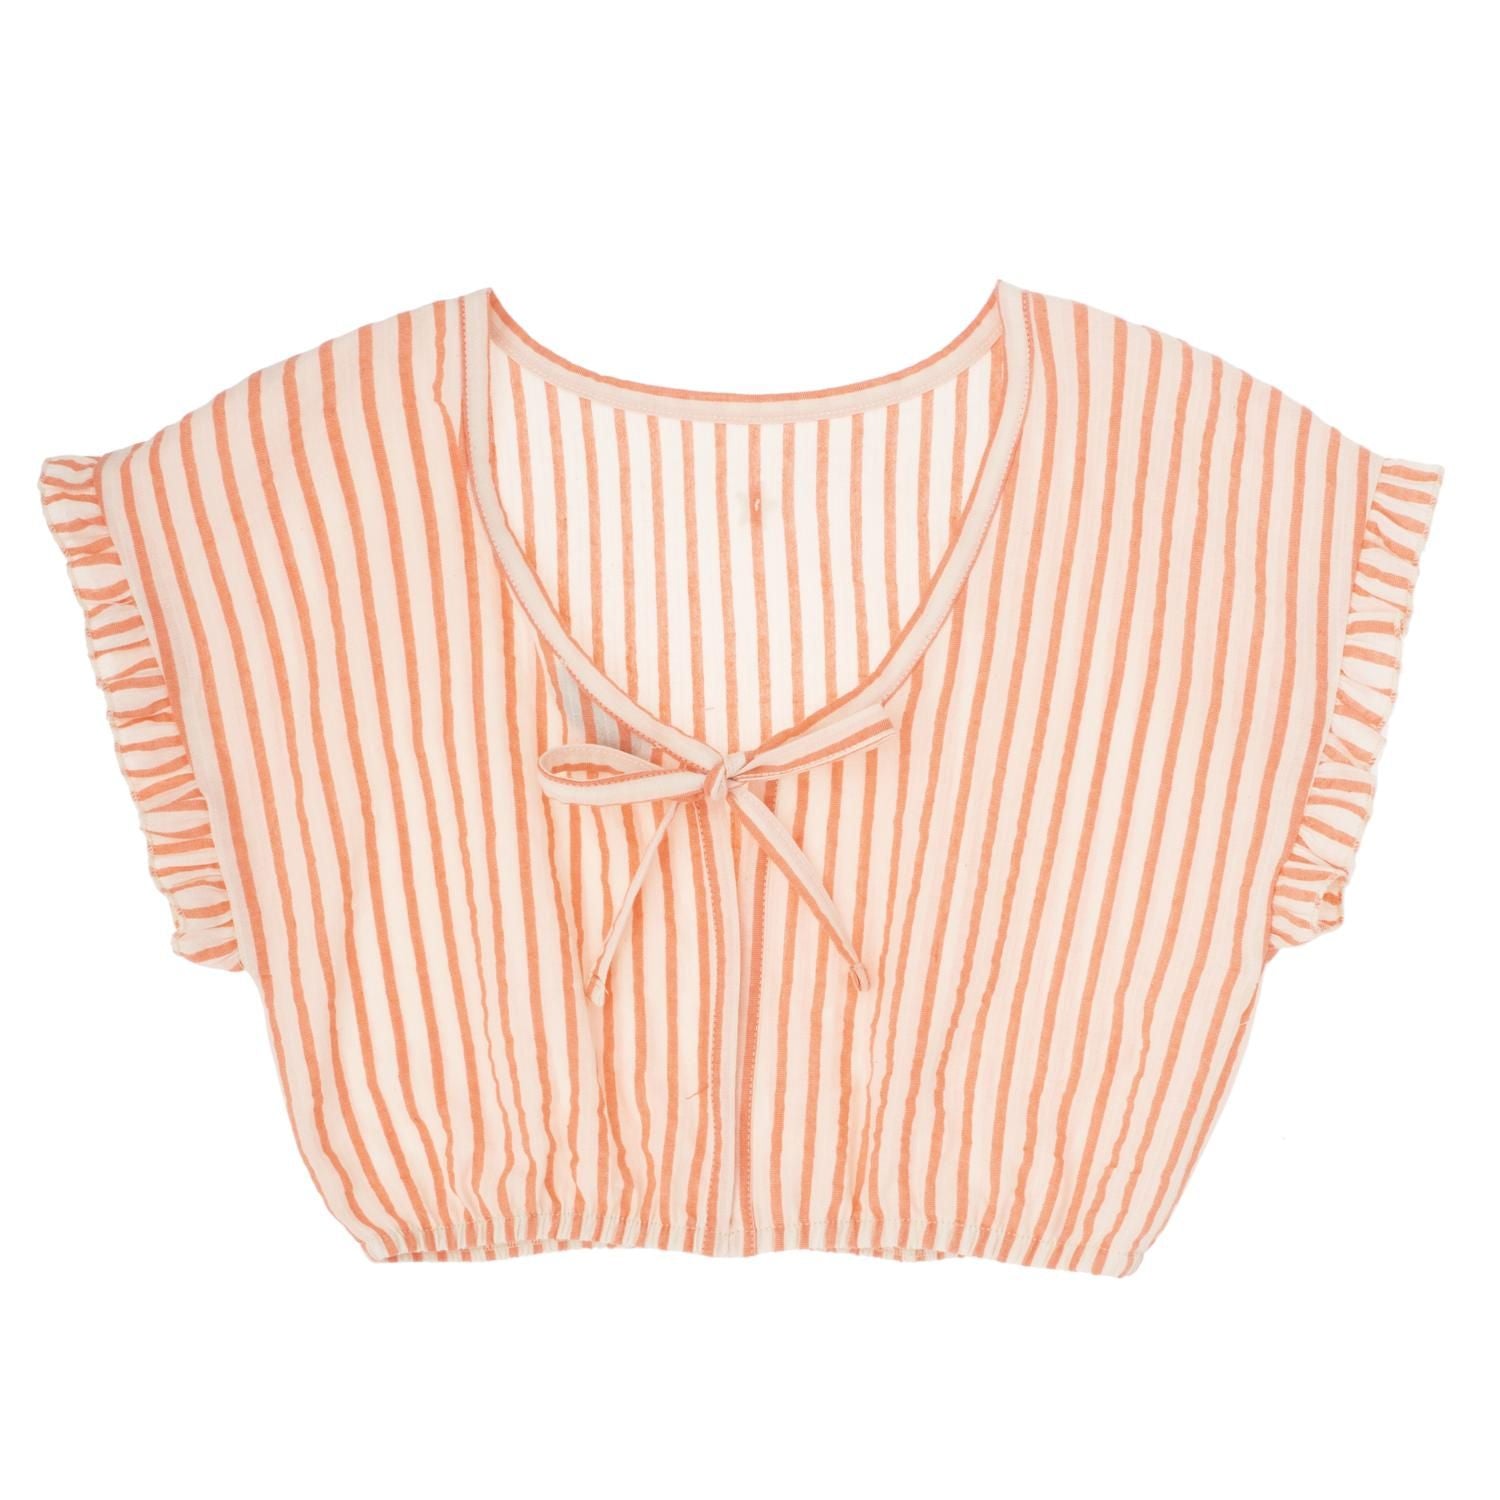 Tocoto Vintage Striped Blouse with Back Neckline - Pink